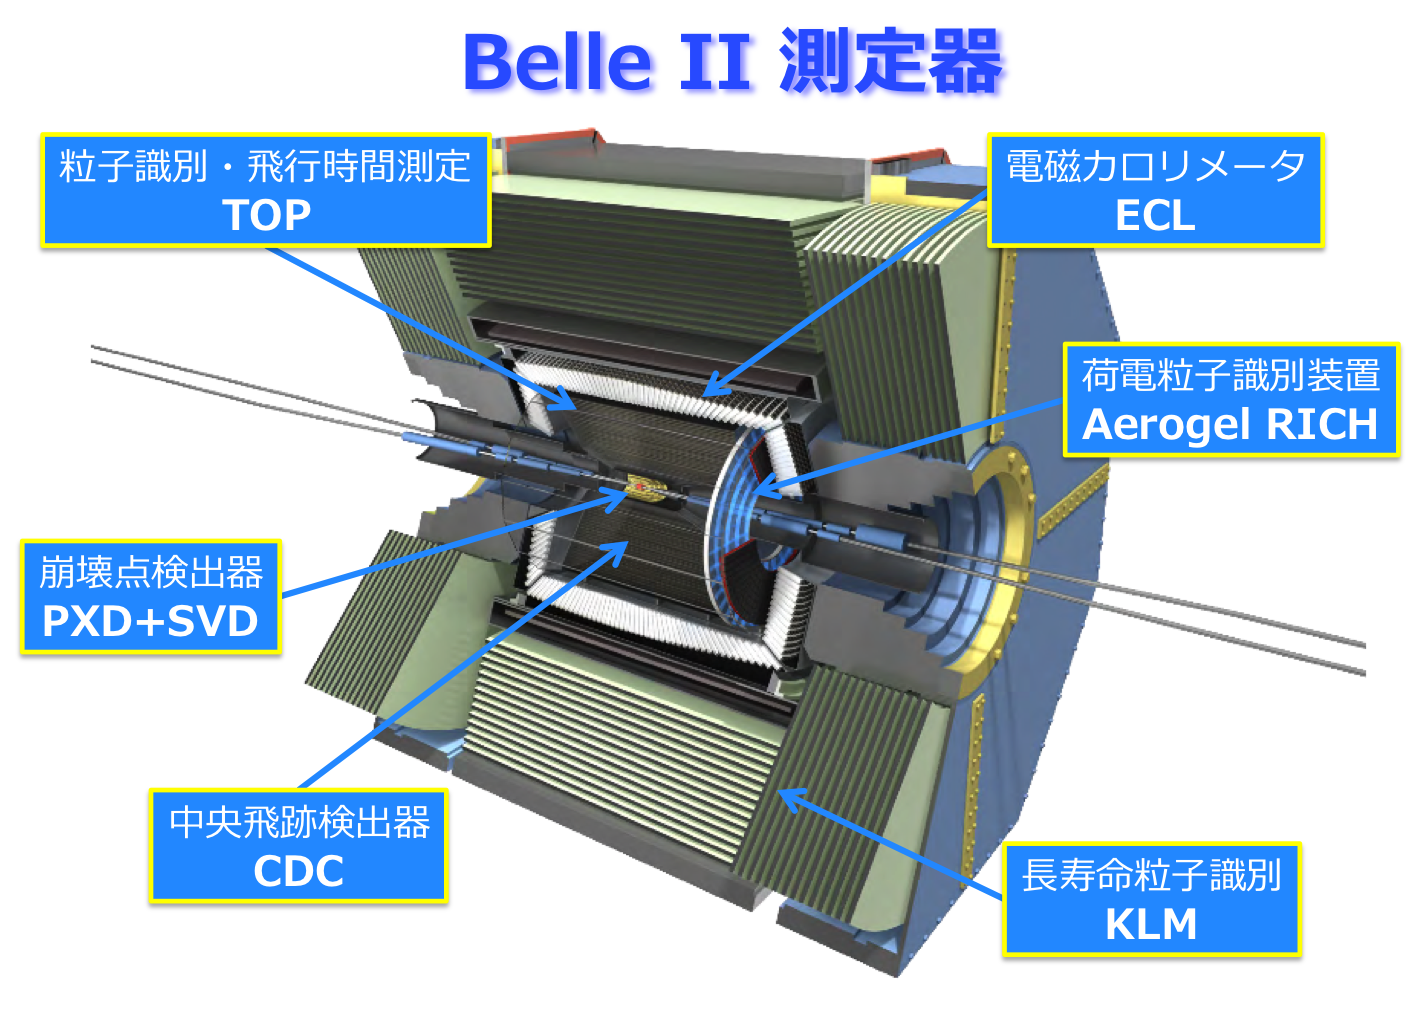 Belle II 測定器の概要図